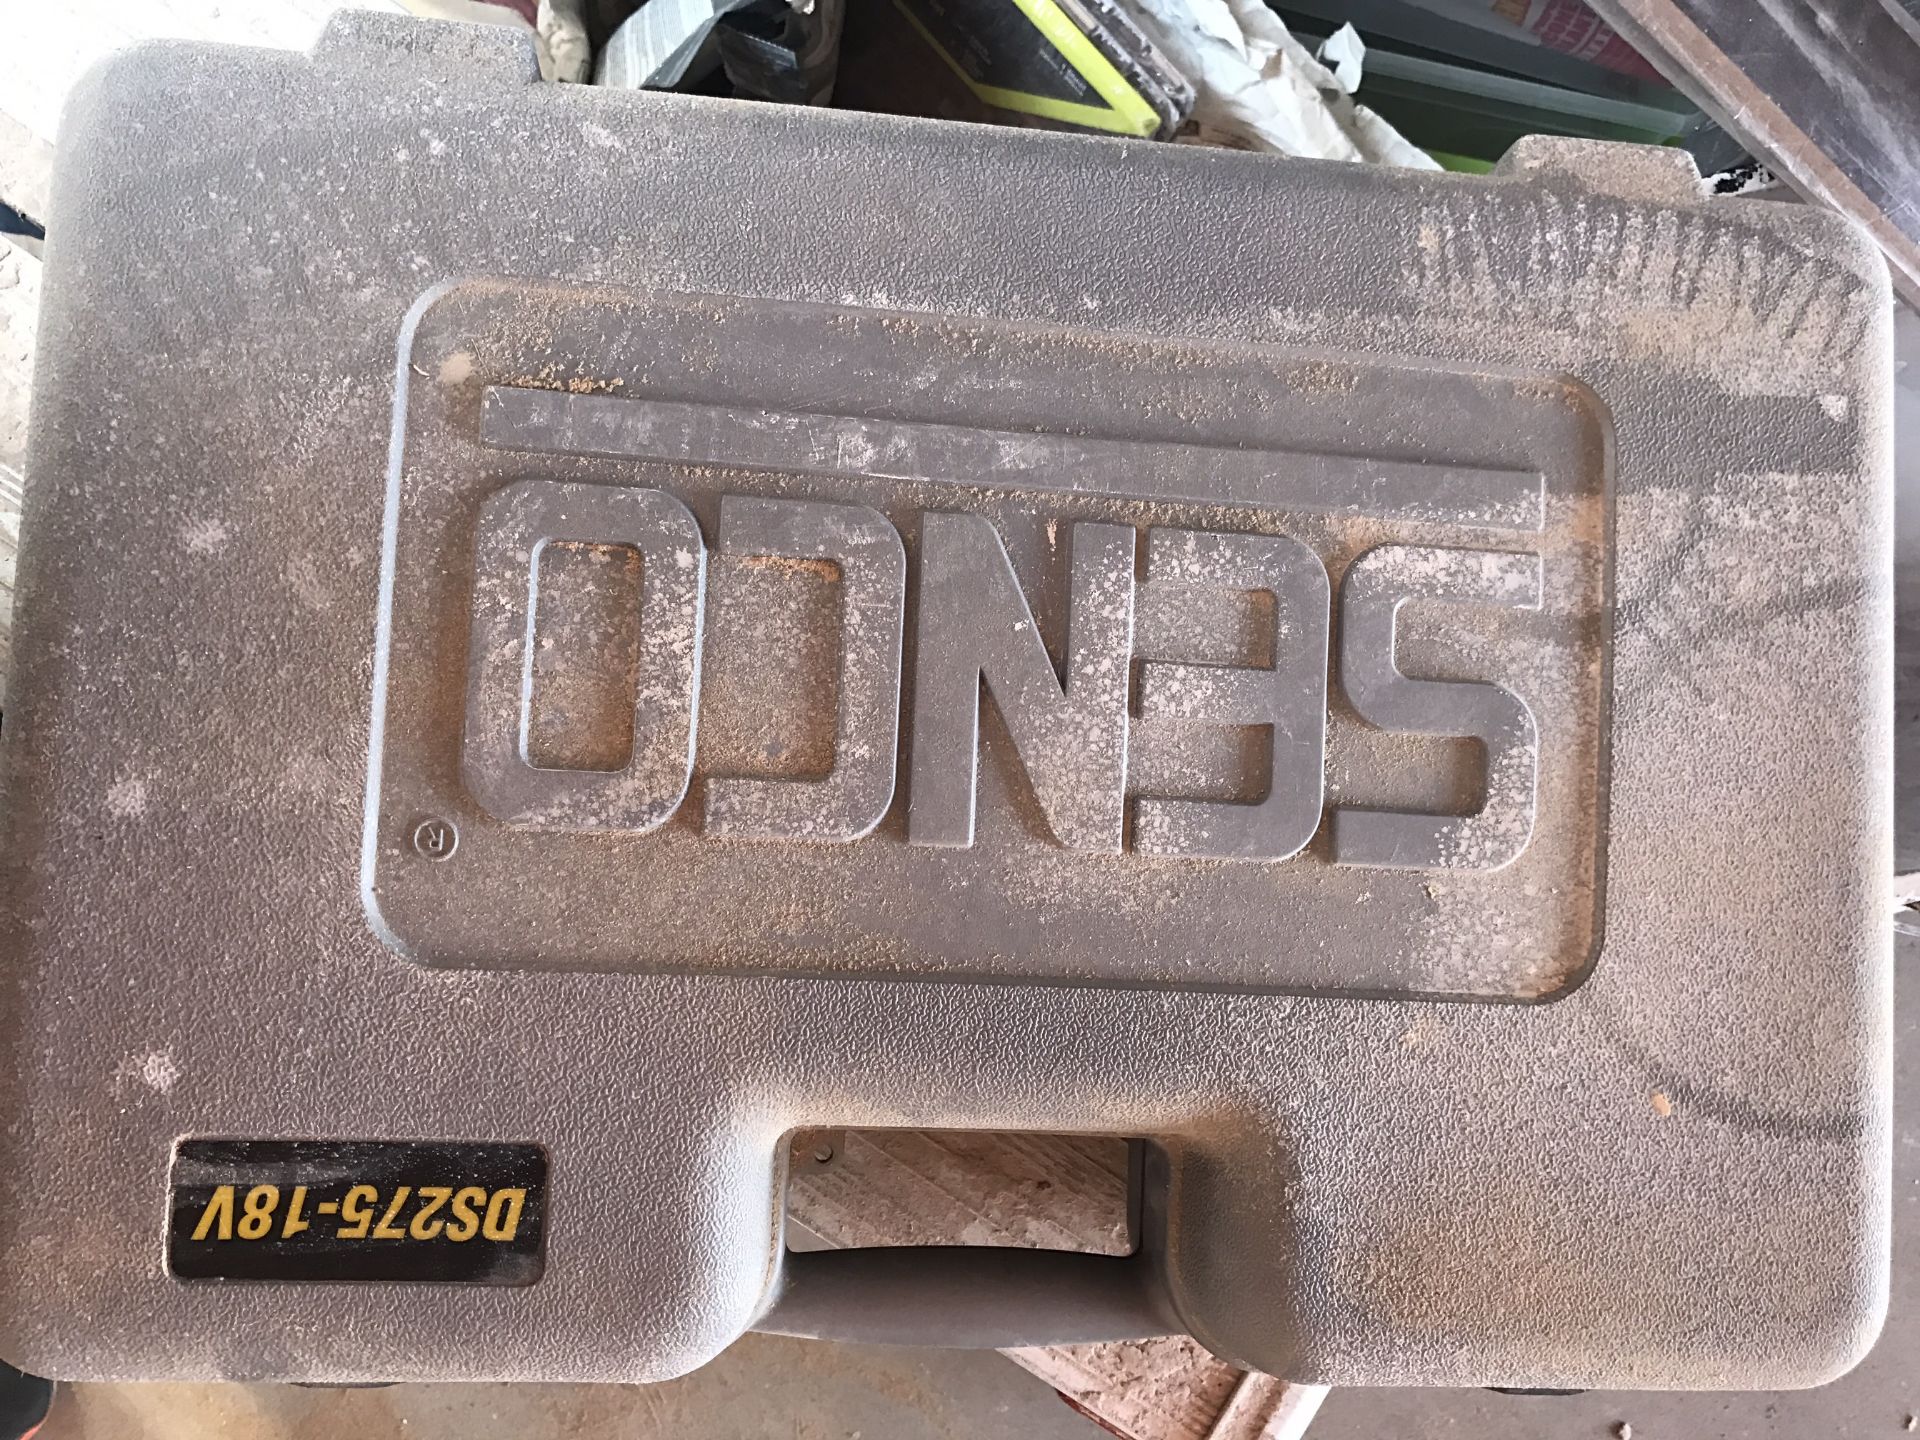 Senco Duraspin Self Feed Cordless Drywall Screw Gun DS275-18V - Image 2 of 4